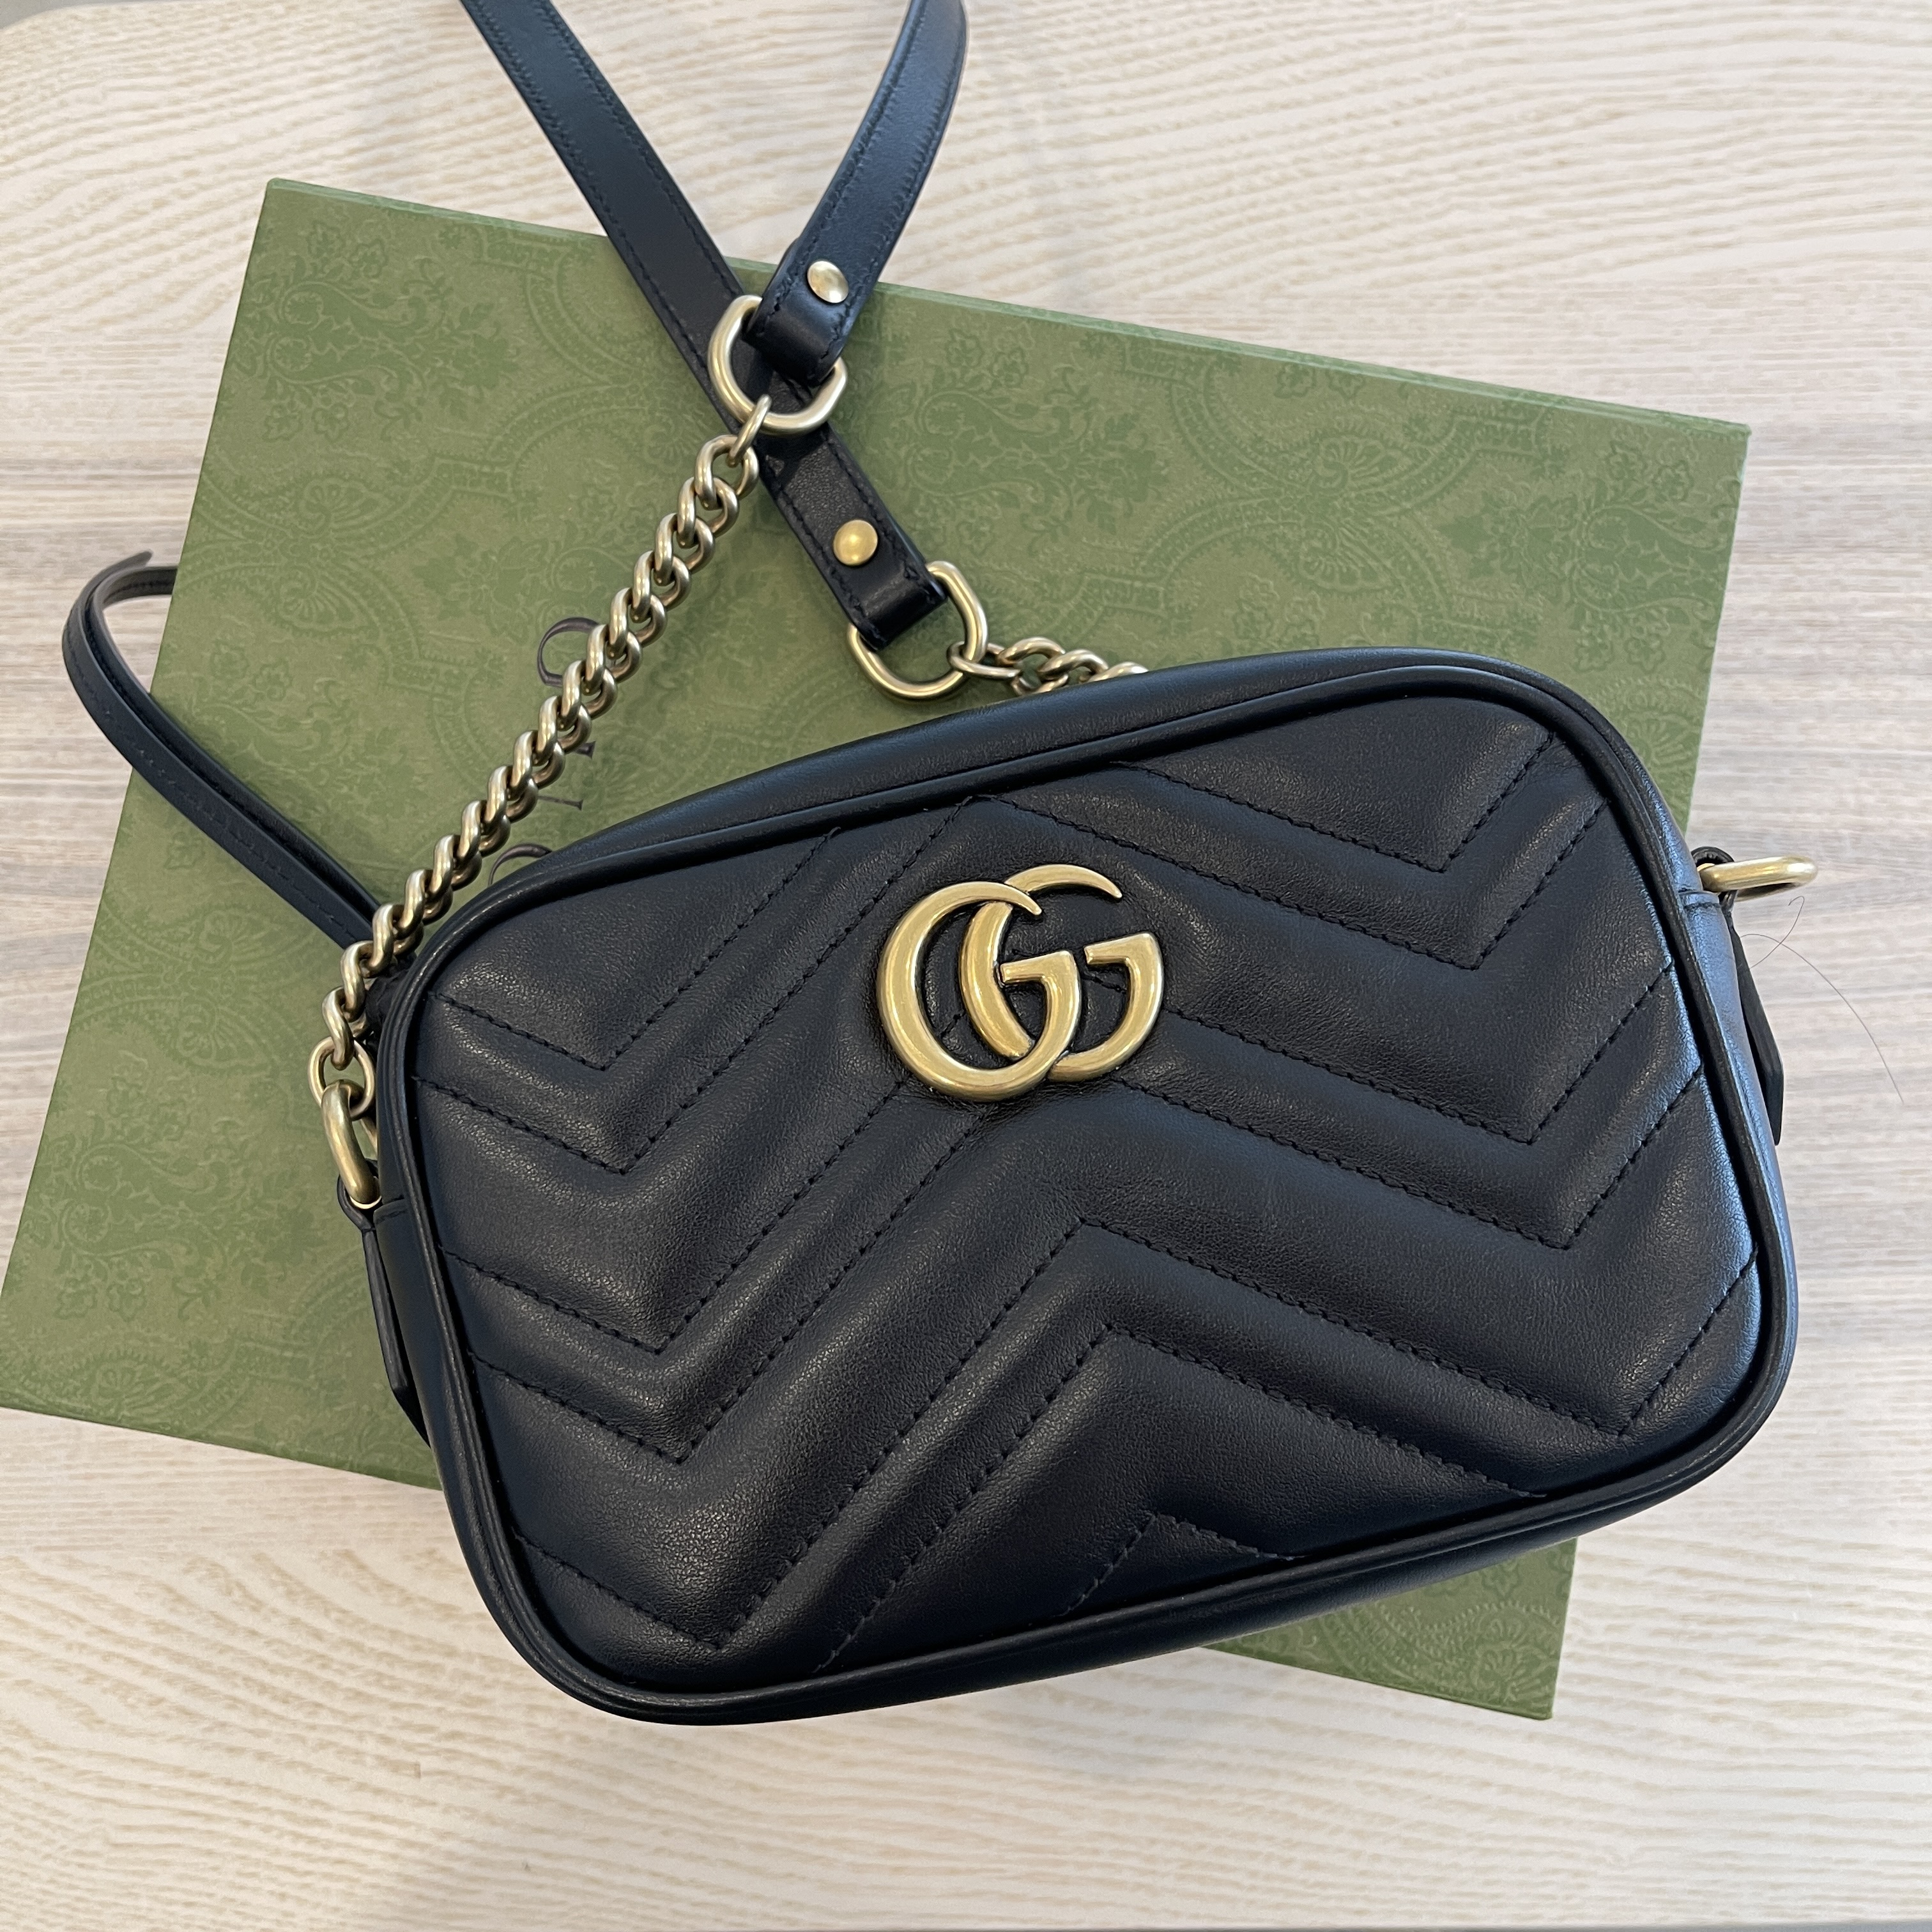 Gucci GG Marmont Matelasse Mini Chain Bag Black in Calfskin